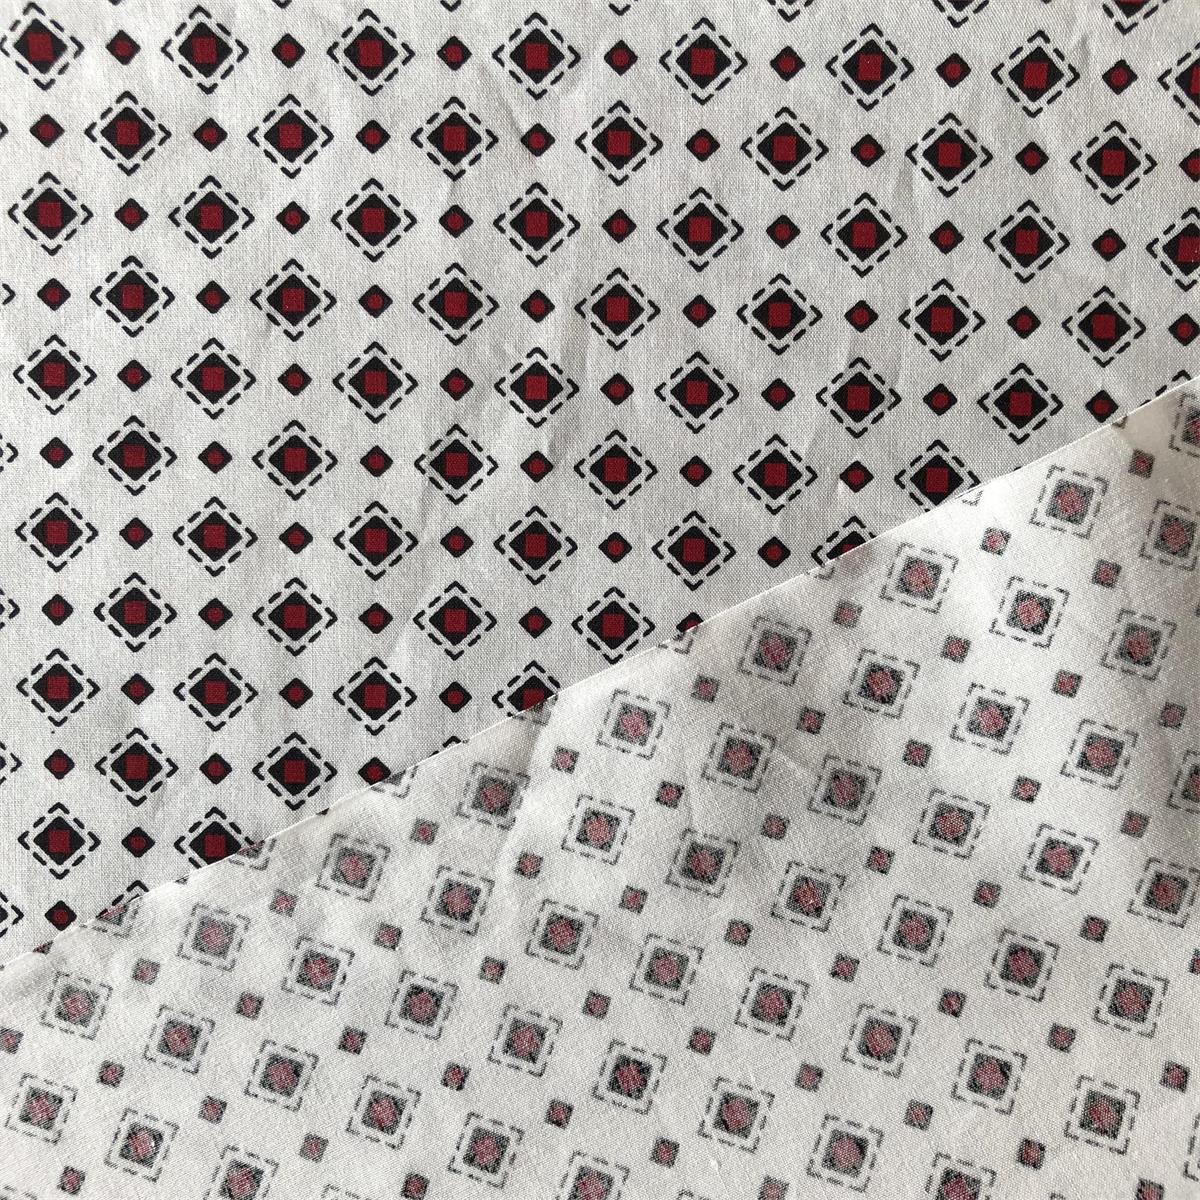 Sun-rising Textile Cotton fabric 60S compact yarn soft comfortable for men's shirts 100% cotton poplin printed shirts fabric